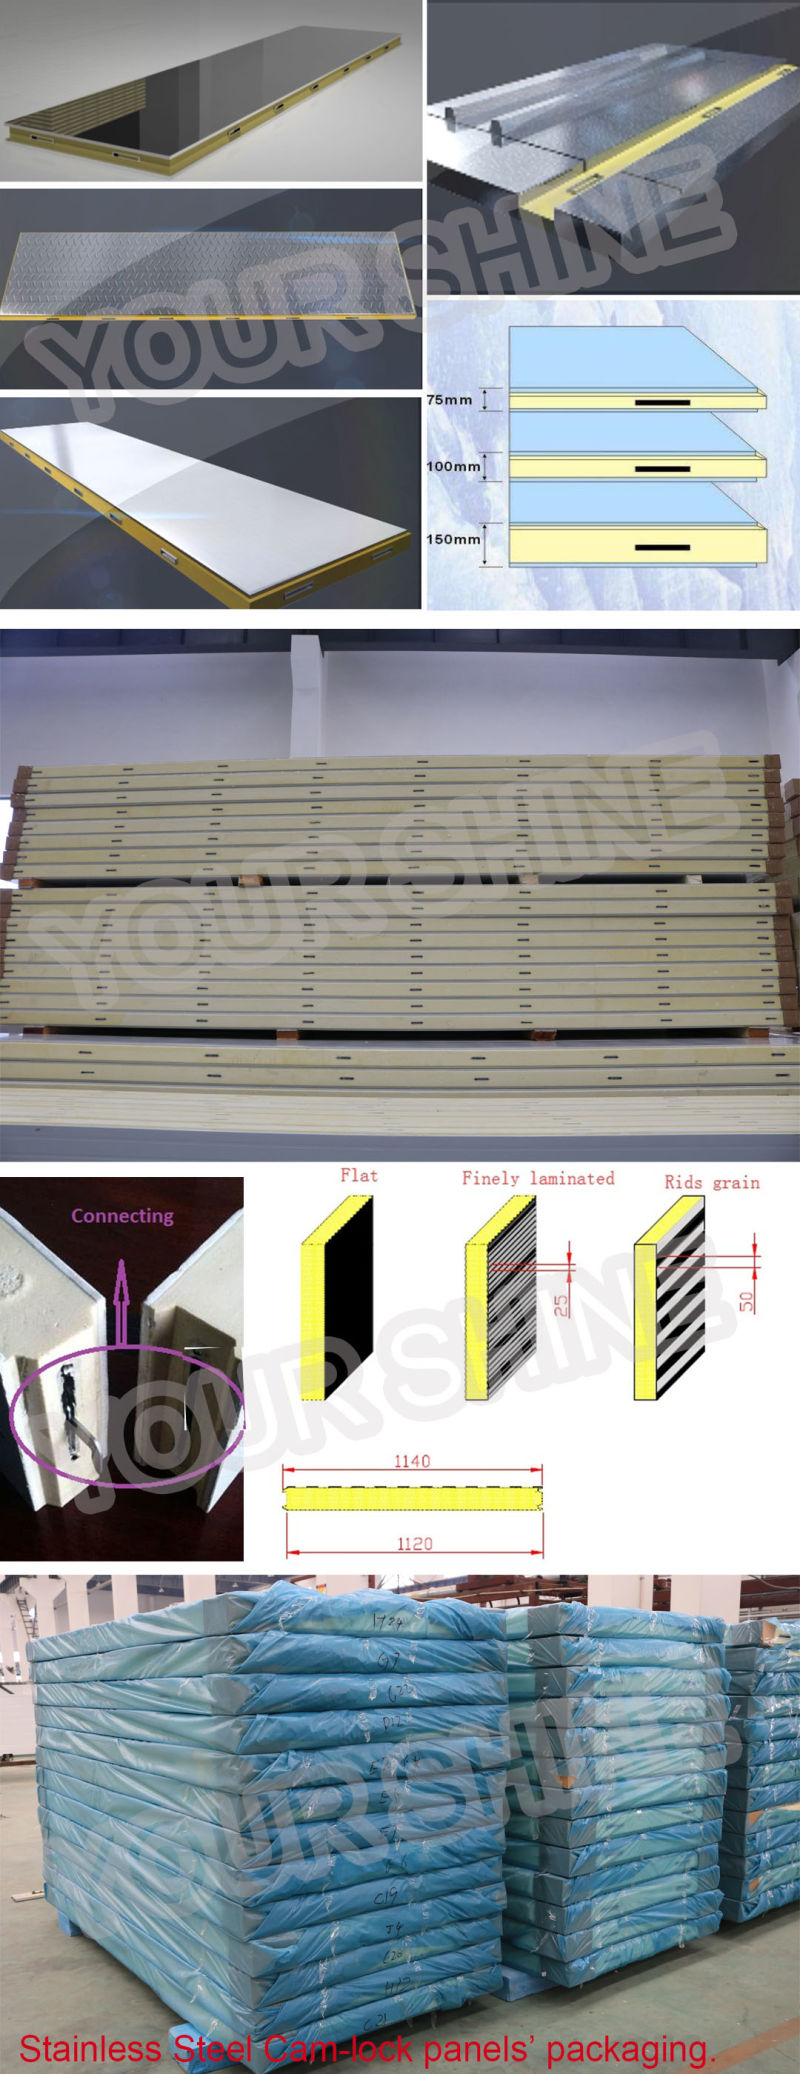 Construction PU Sandwich Panel Materials/Roof PU Panels/PU Wall Panels